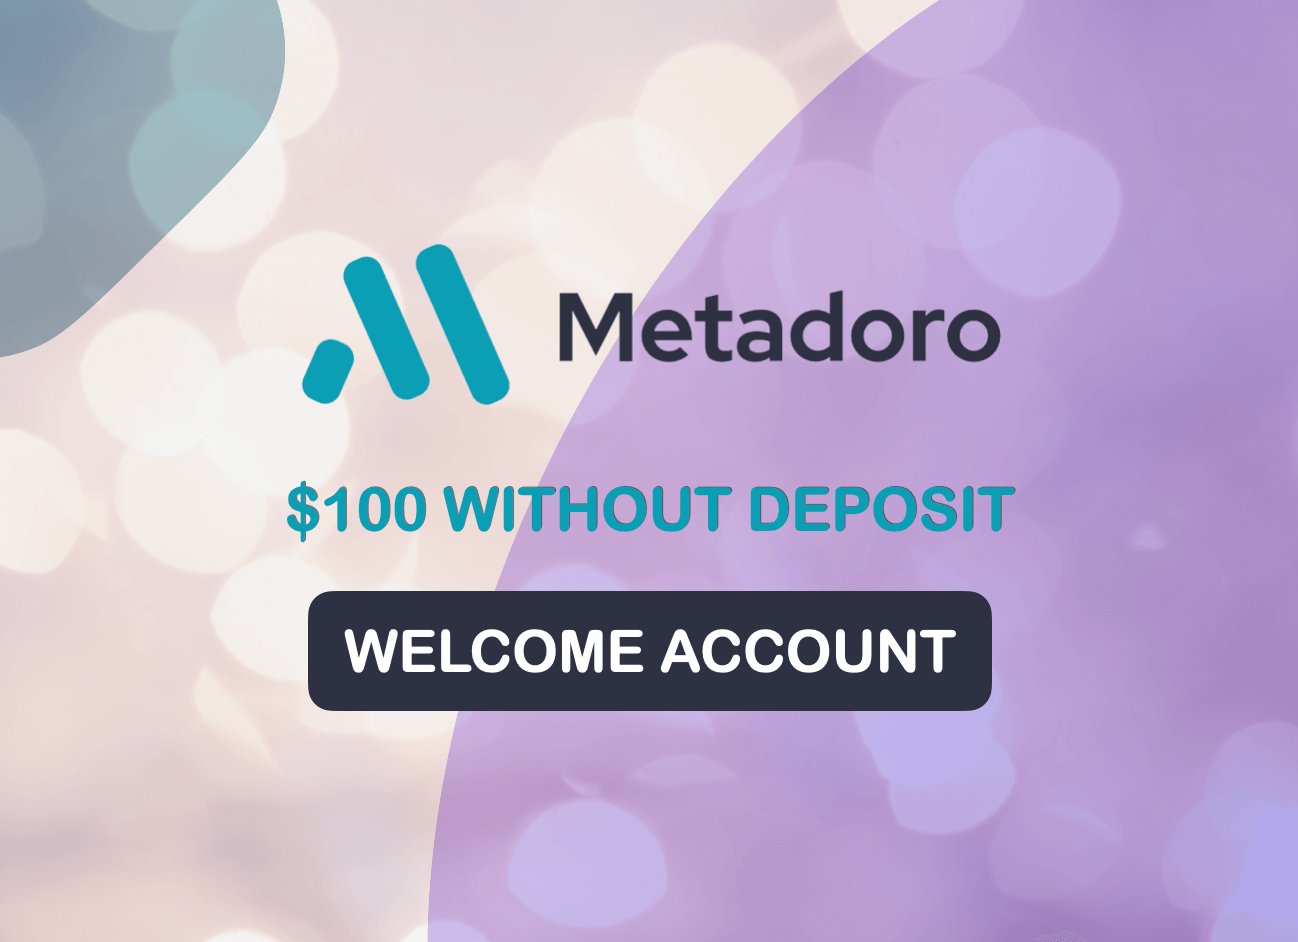 Metadoro Welcome Account